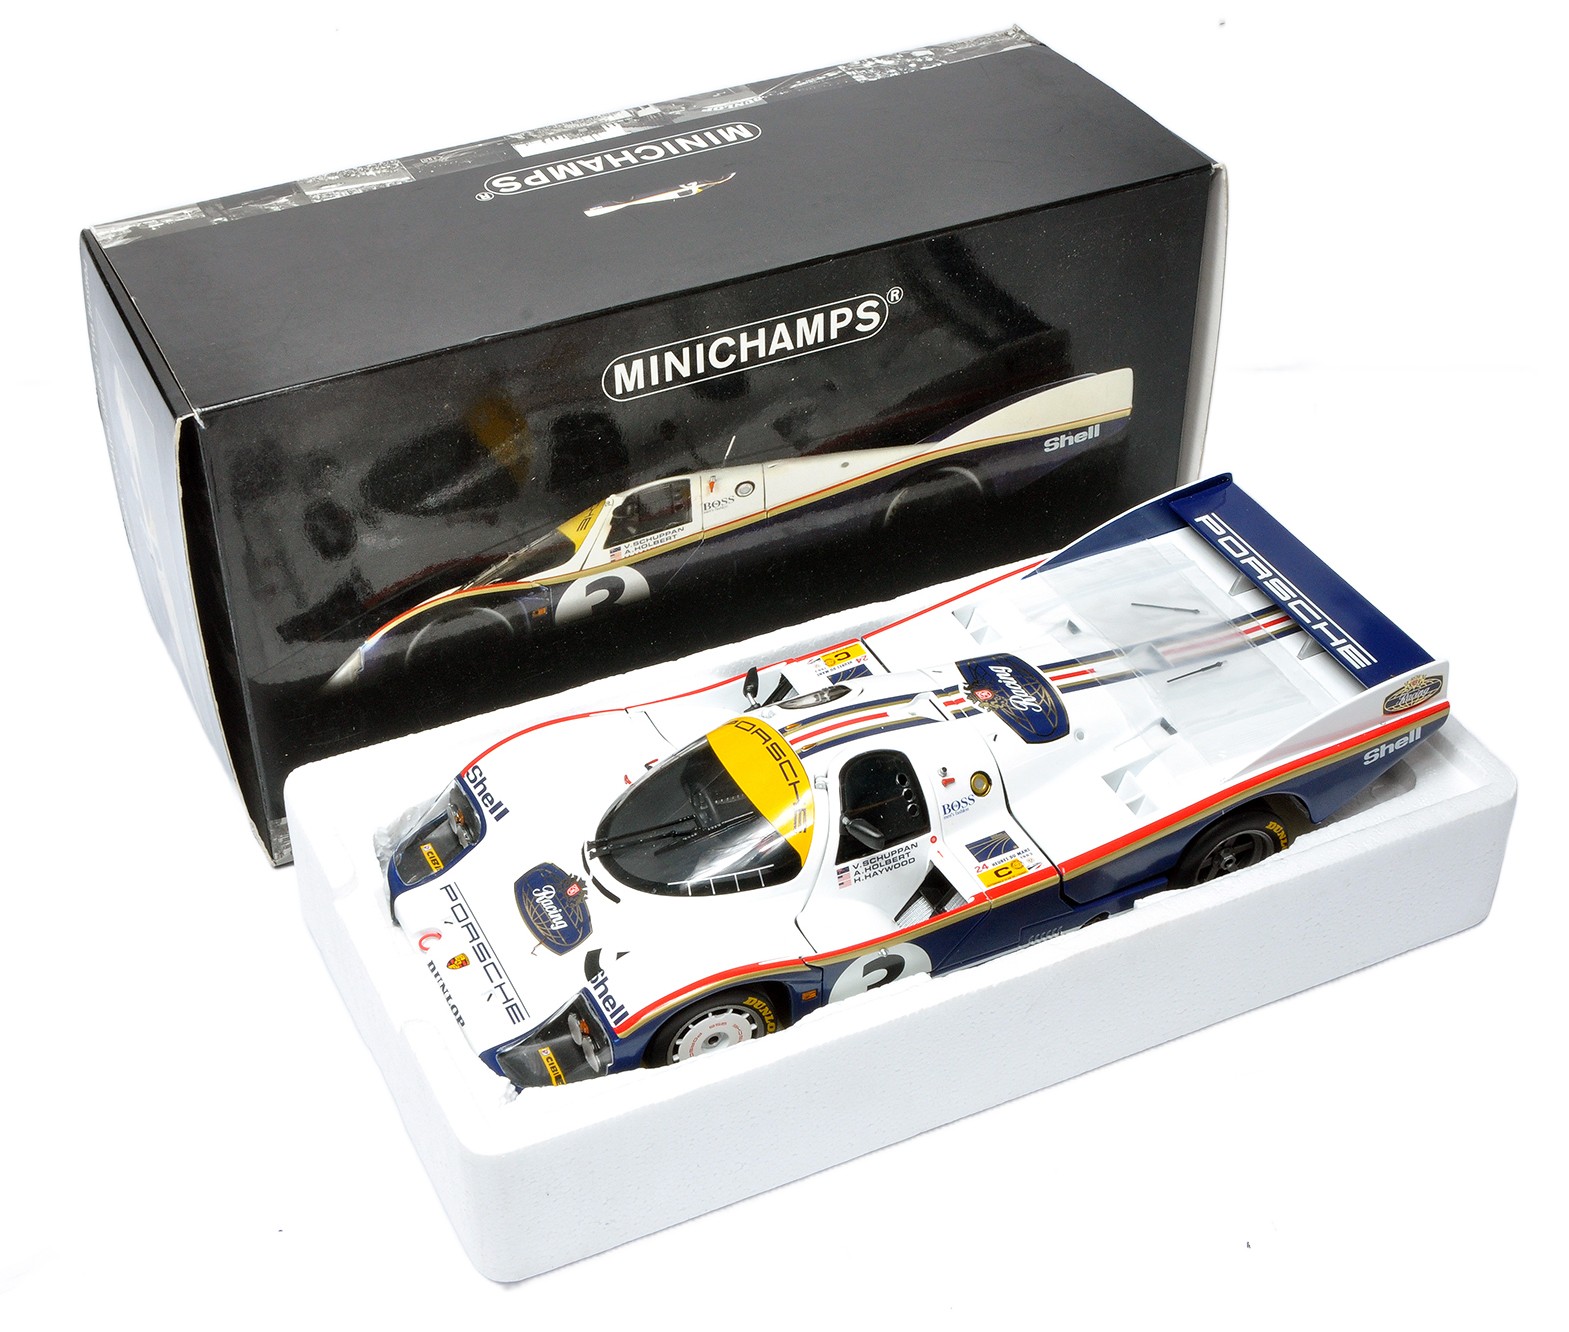 Minichamps 1/18 diecast model issue comprising Porsche 956L 1983 Le Mans Racing Car. Looks to be